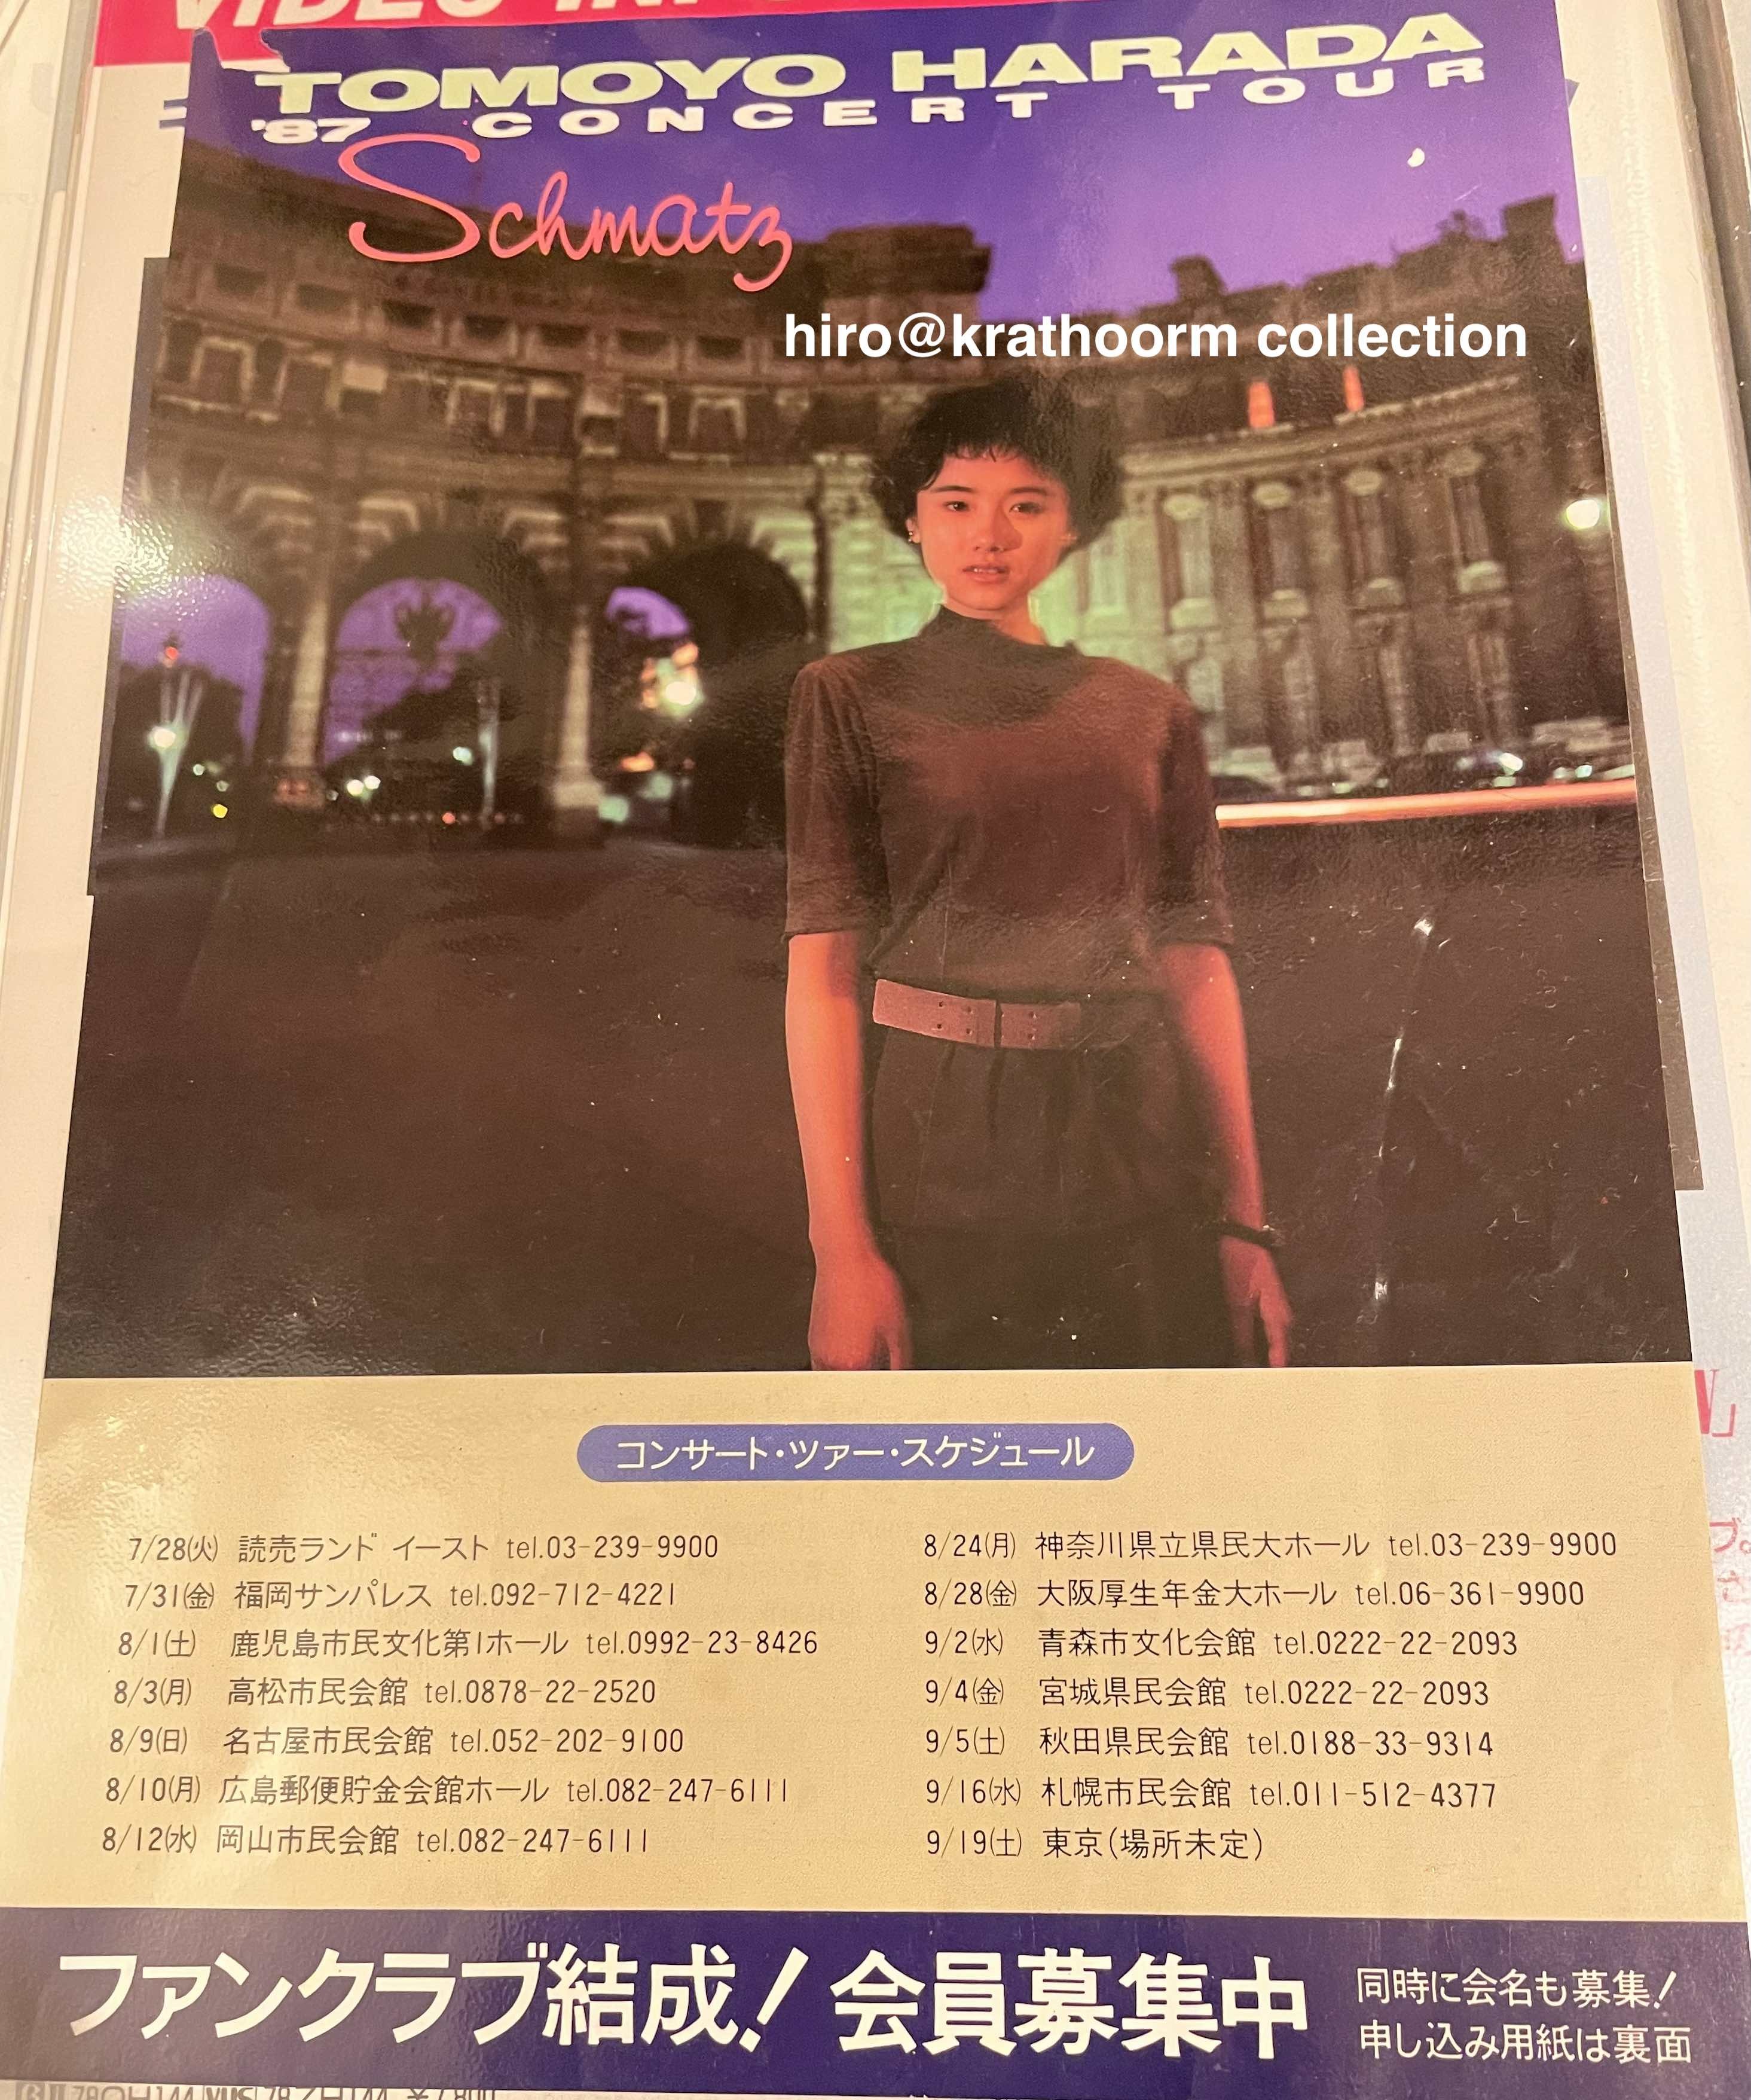 「Schmatz Concert Tour」　1987.8.28 大阪厚生年金会館大ホール　ー原田知世さんのライブ・アーカイブス